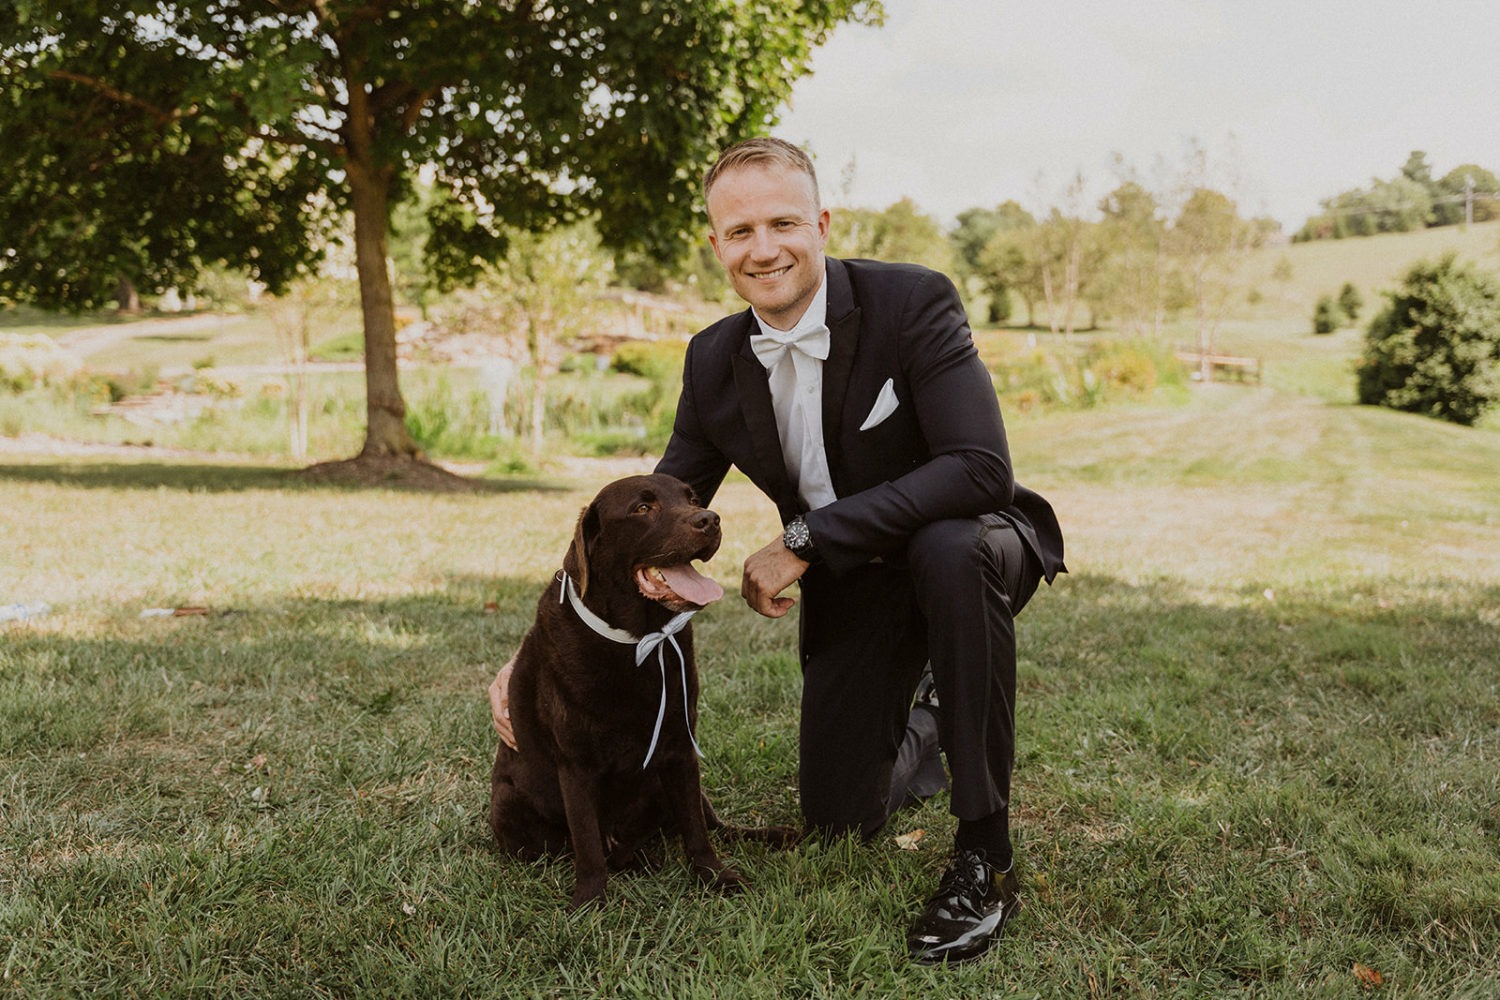 groom holds dog in grassy yard at wedding